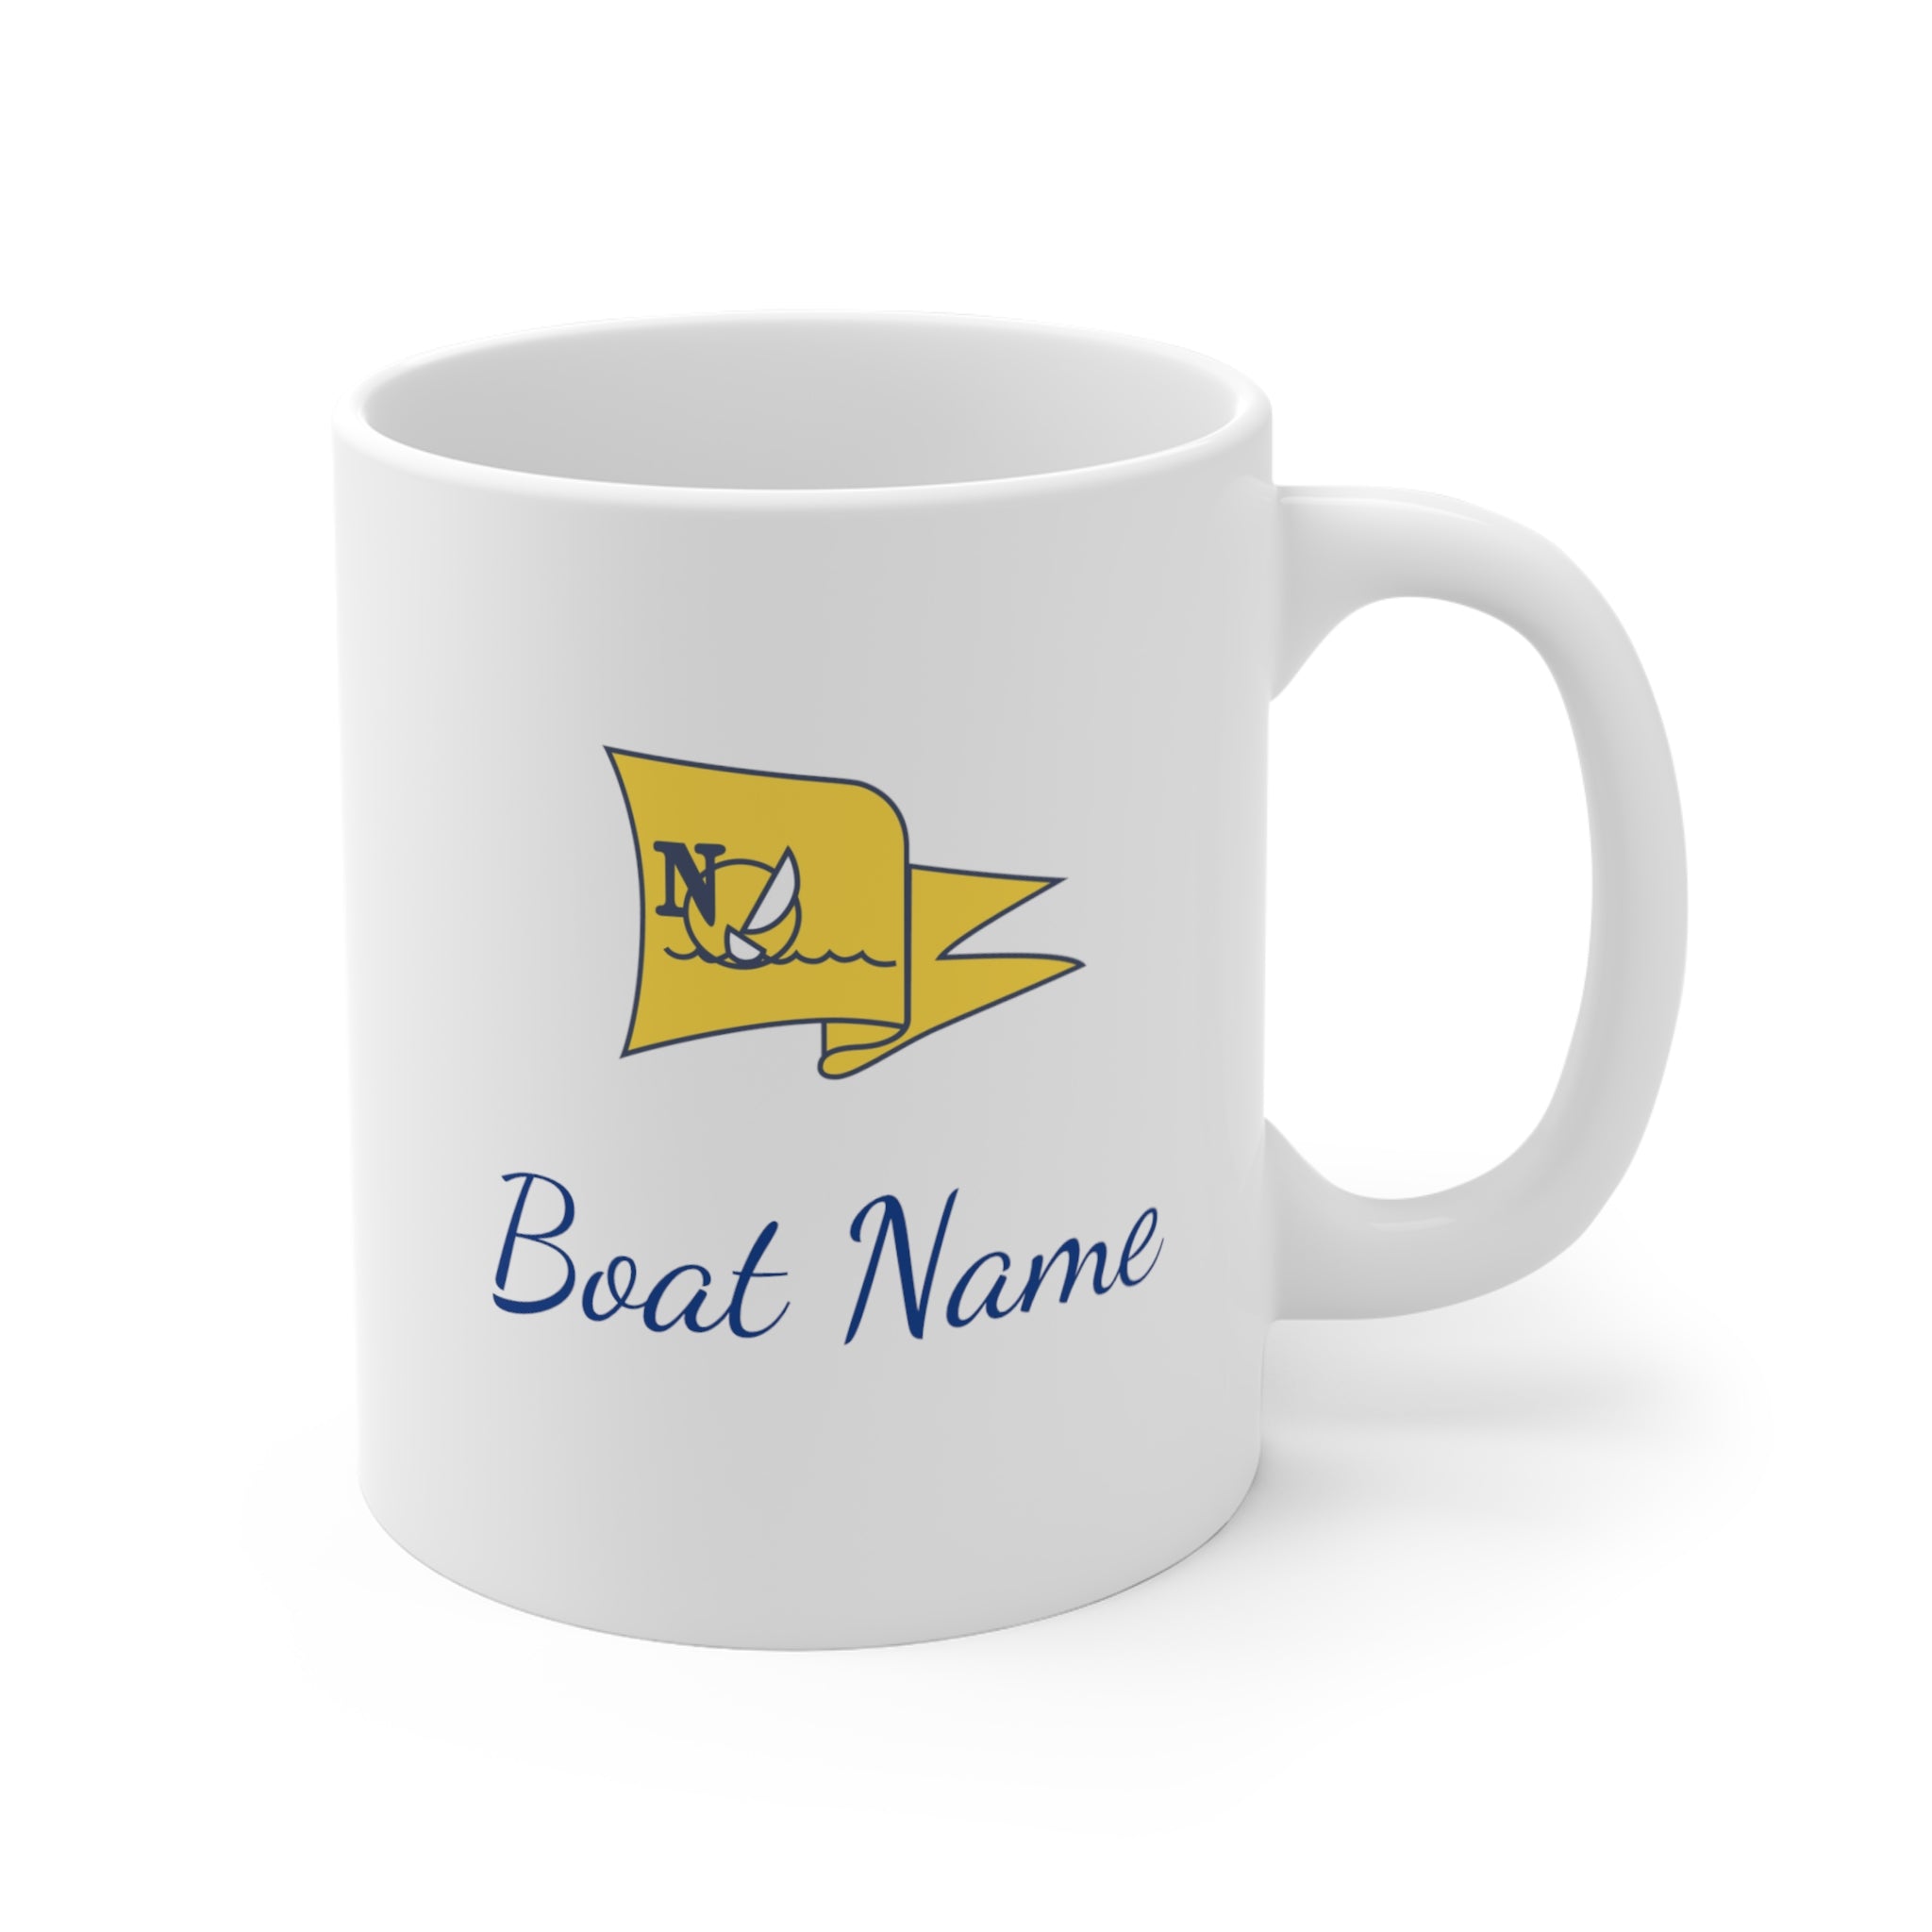 Boat Name + NSYC Mug 11oz